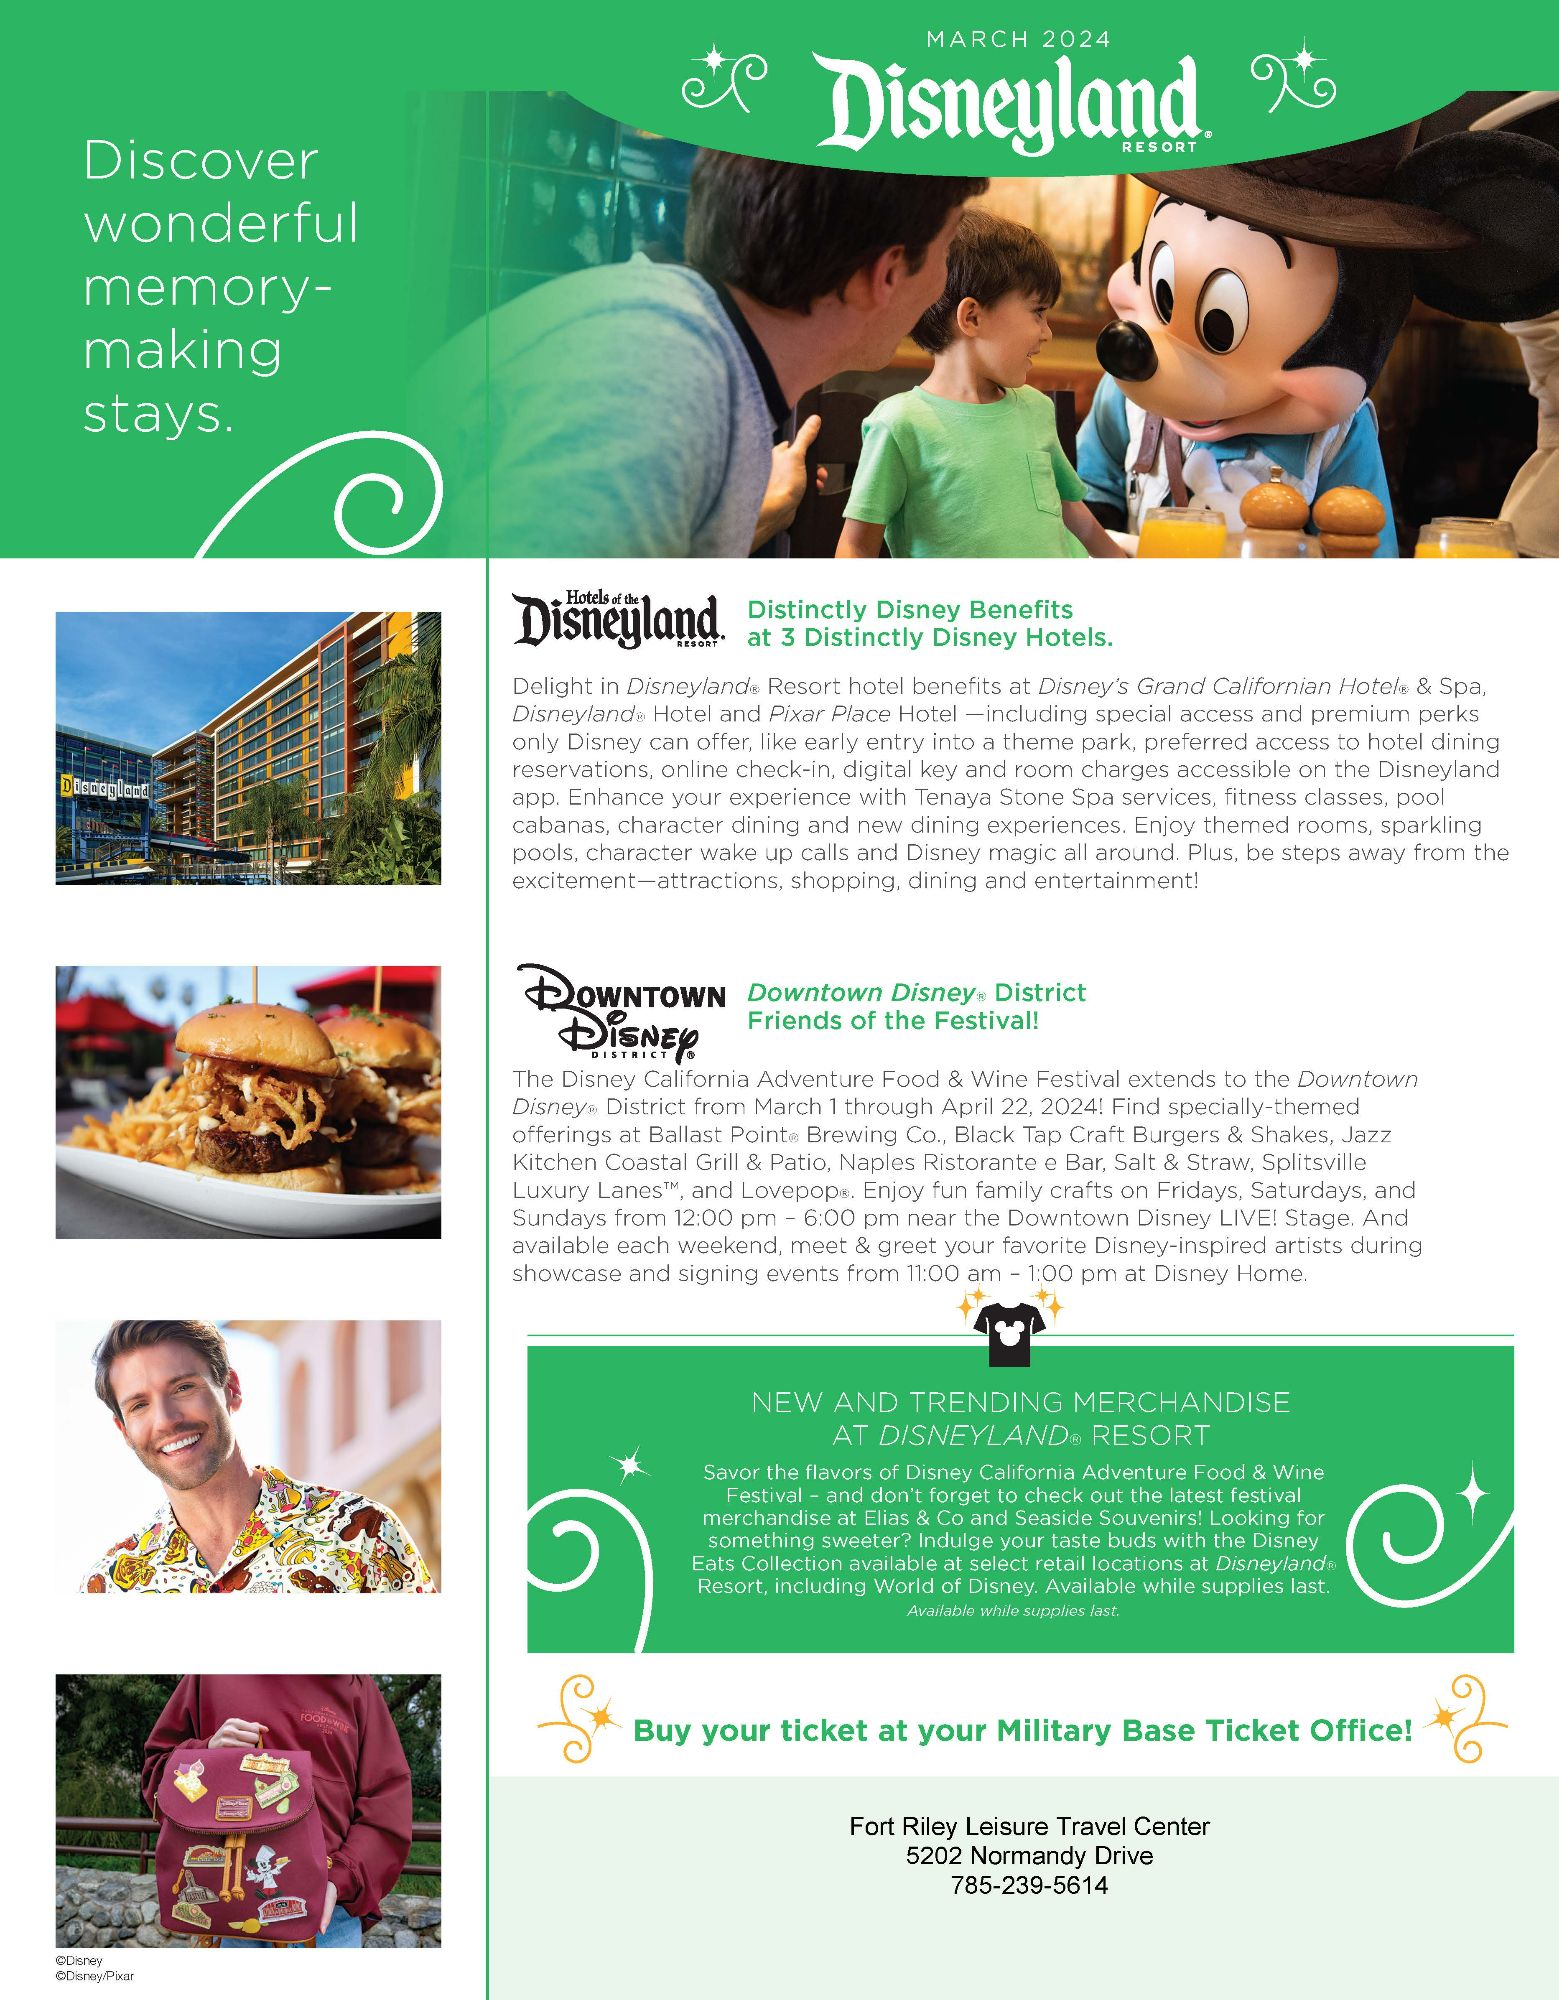 Disneyland March 2024 Flyer_Page_2.jpg